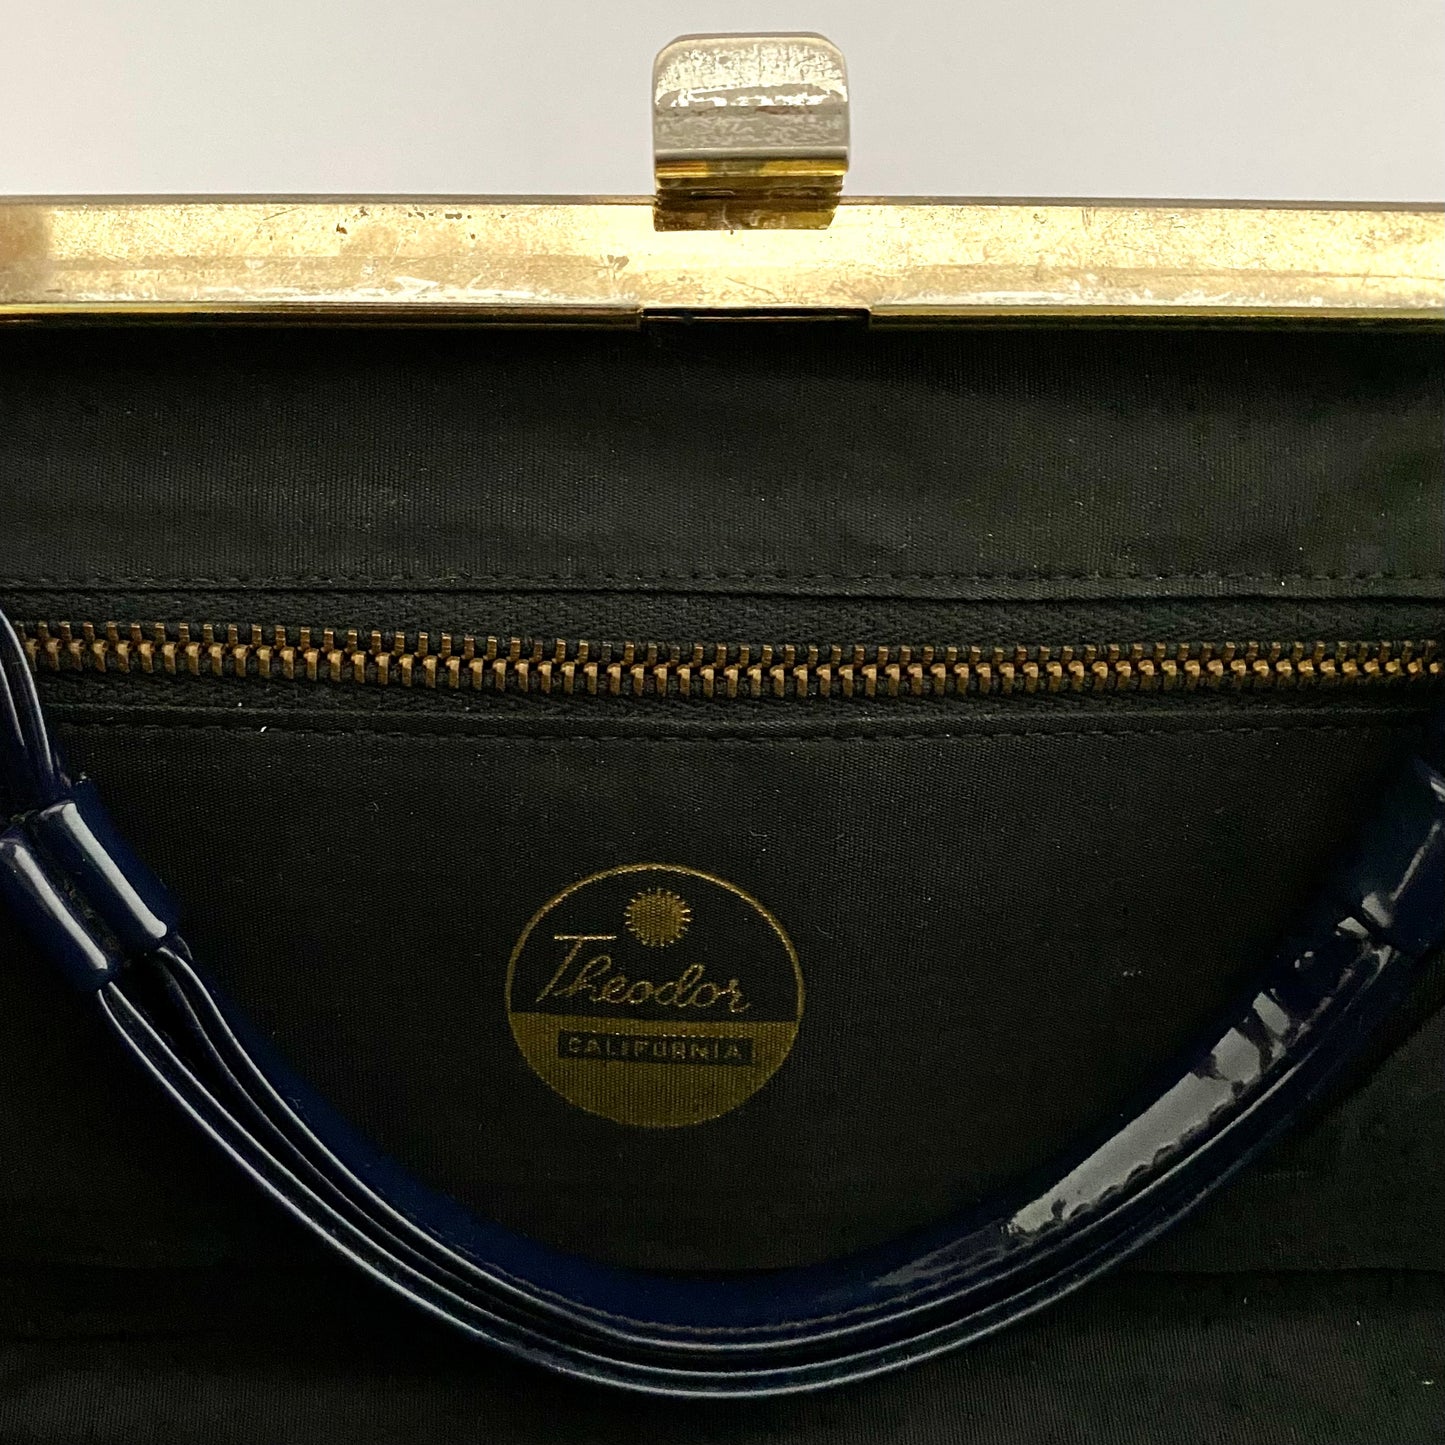 1950s Theodor California Blue Patent Leather Handbag/Clutch